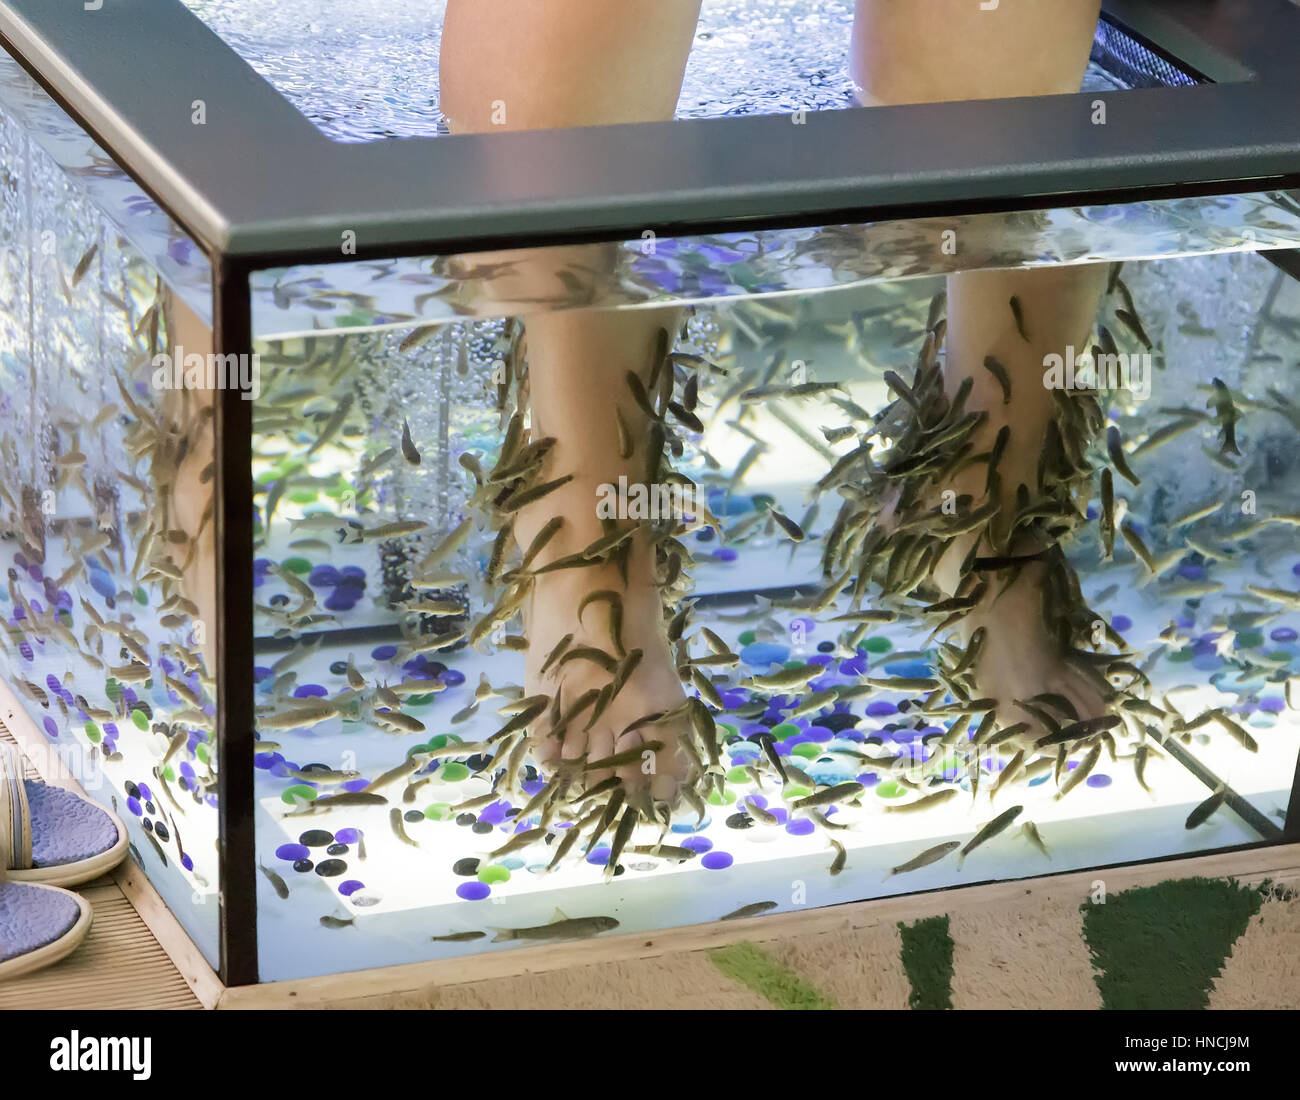 A woman holds a fish-Spa: scrub and pedicure on the feet using Garra rufa  fish in the aquarium Stock Photo - Alamy